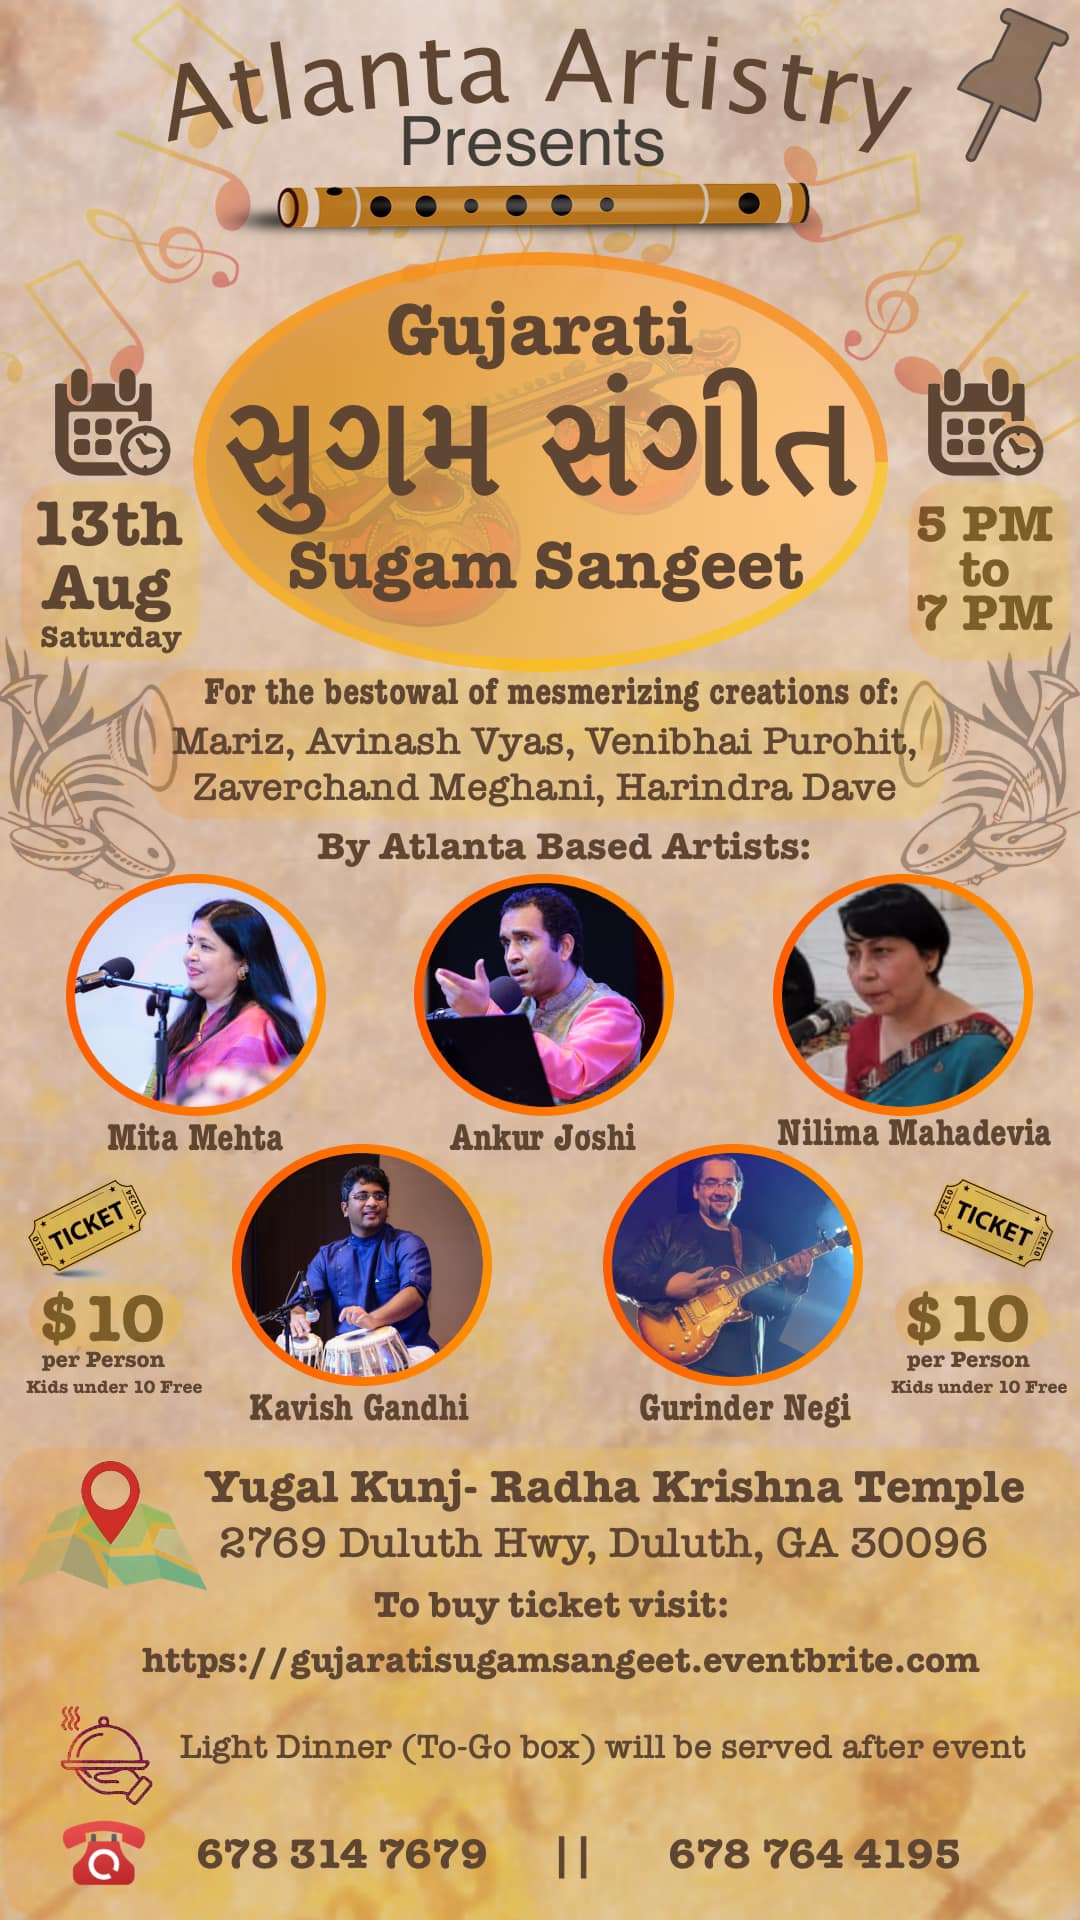 Gujarati Sugam Sangeet by Atlanta Based Artists